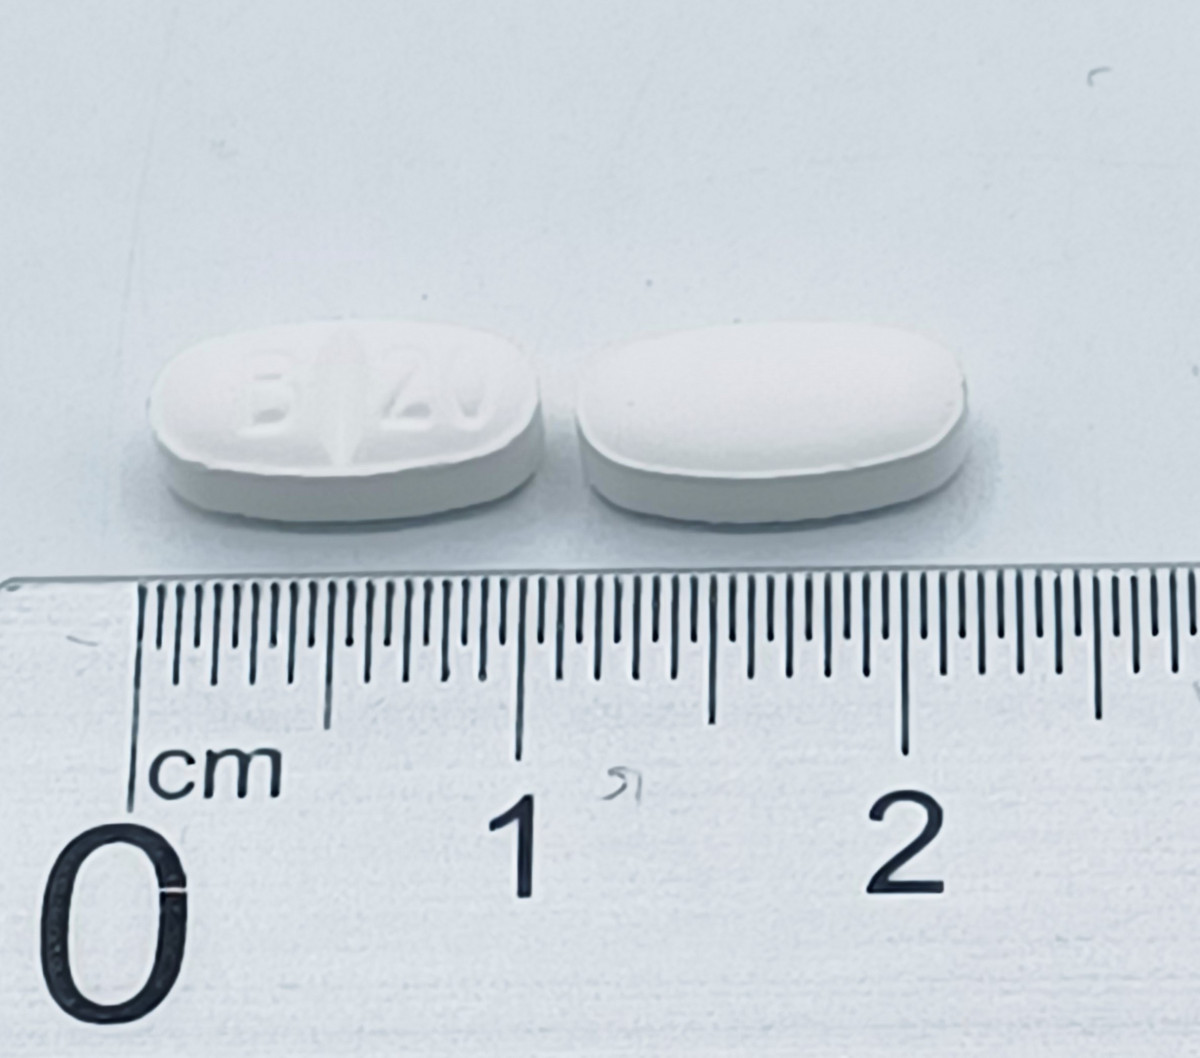 ABRILIA 20 MG COMPRIMIDOS EFG, 14 comprimidos (Blister Al/Al/PA-PVC) fotografía de la forma farmacéutica.